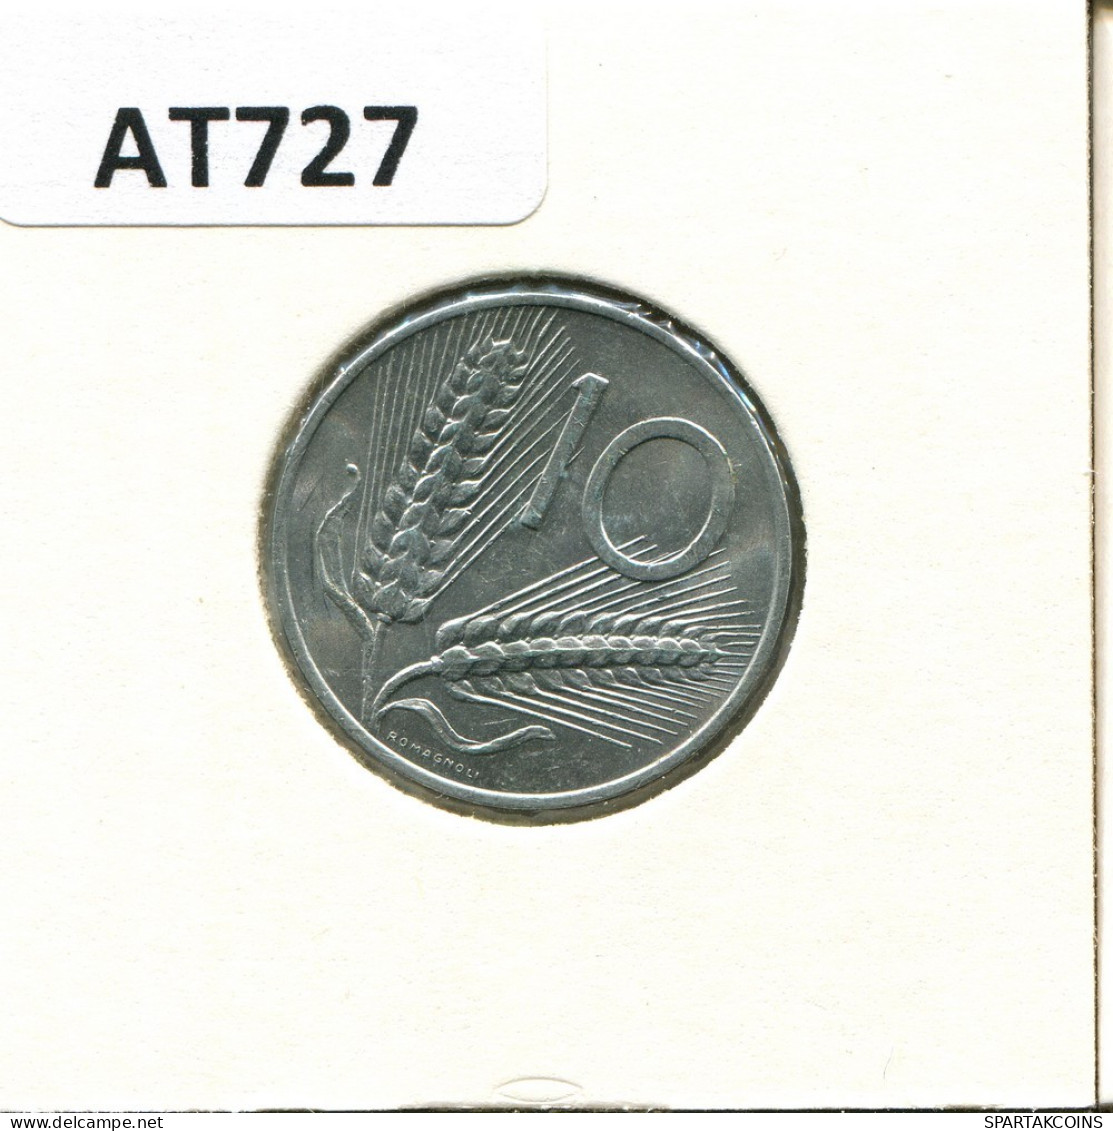 10 LIRE 1966 ITALY Coin #AT727.U.A - 10 Liras